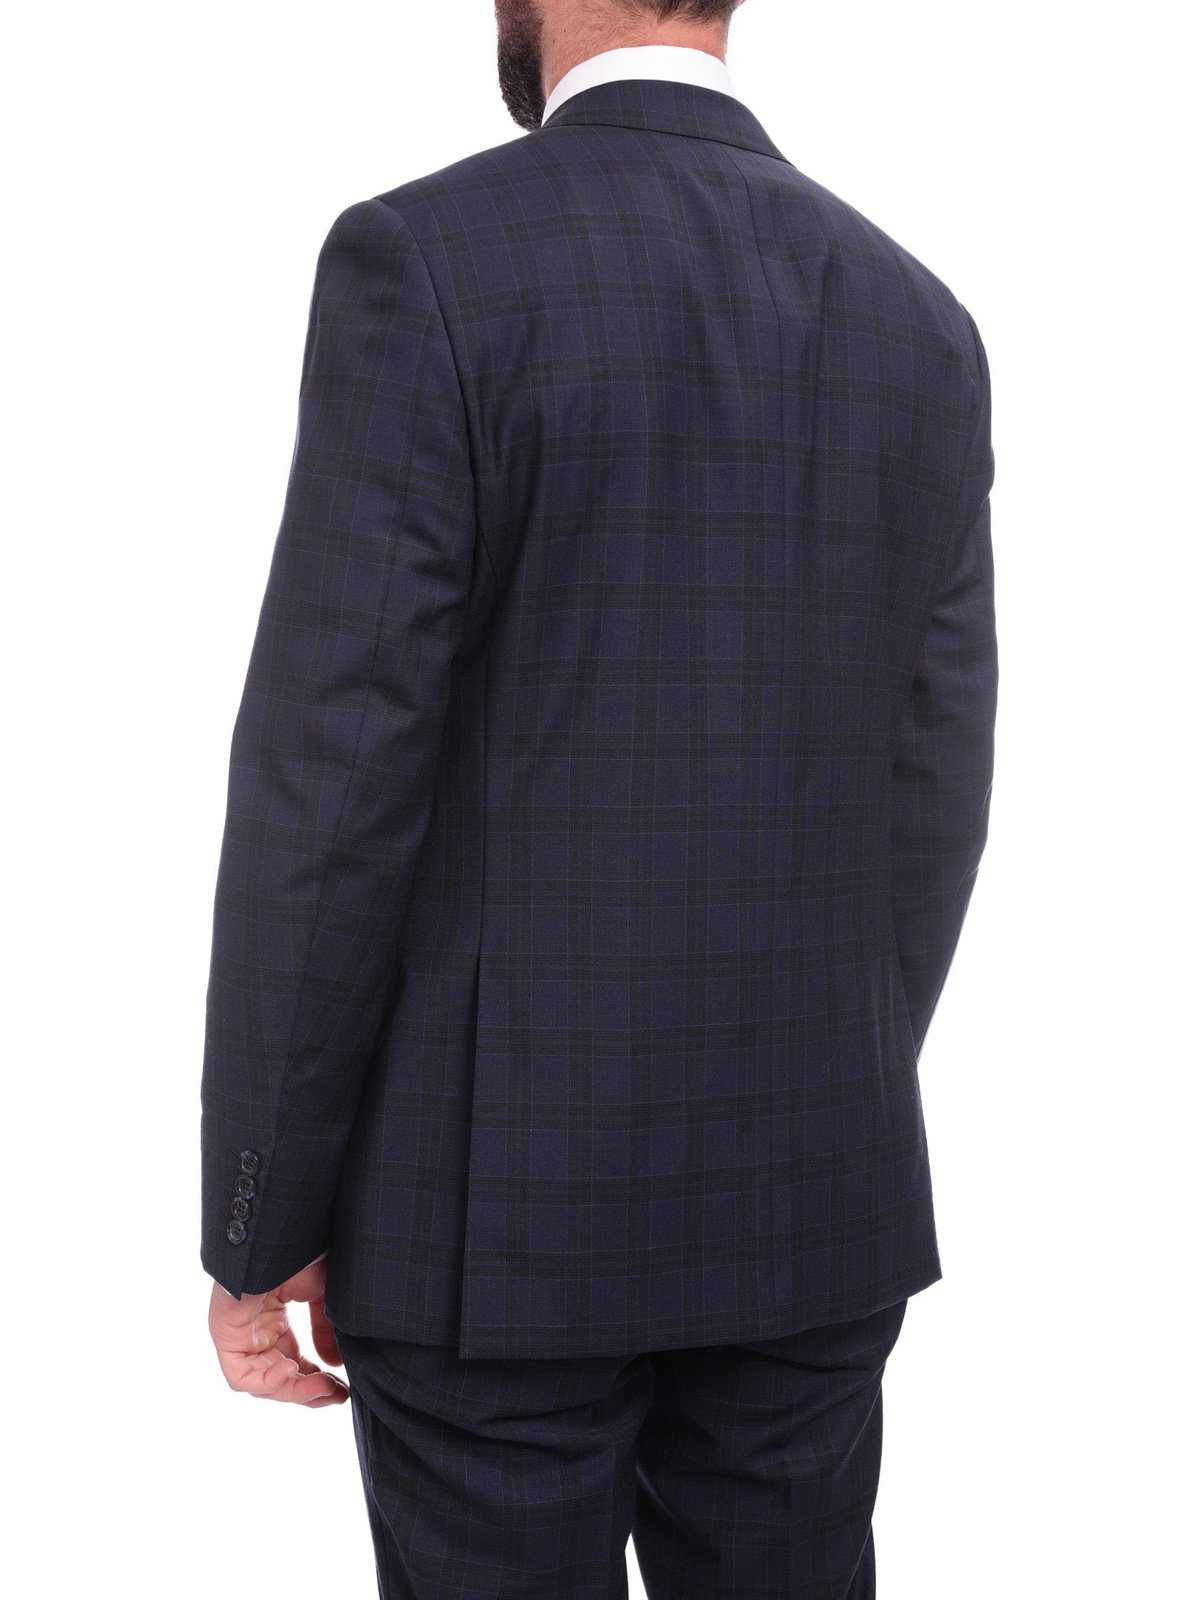 Napoli TWO PIECE SUITS Men's Napoli Classic Fit Blue Windowpane Plaid Super 150s 100% Italian Wool Suit